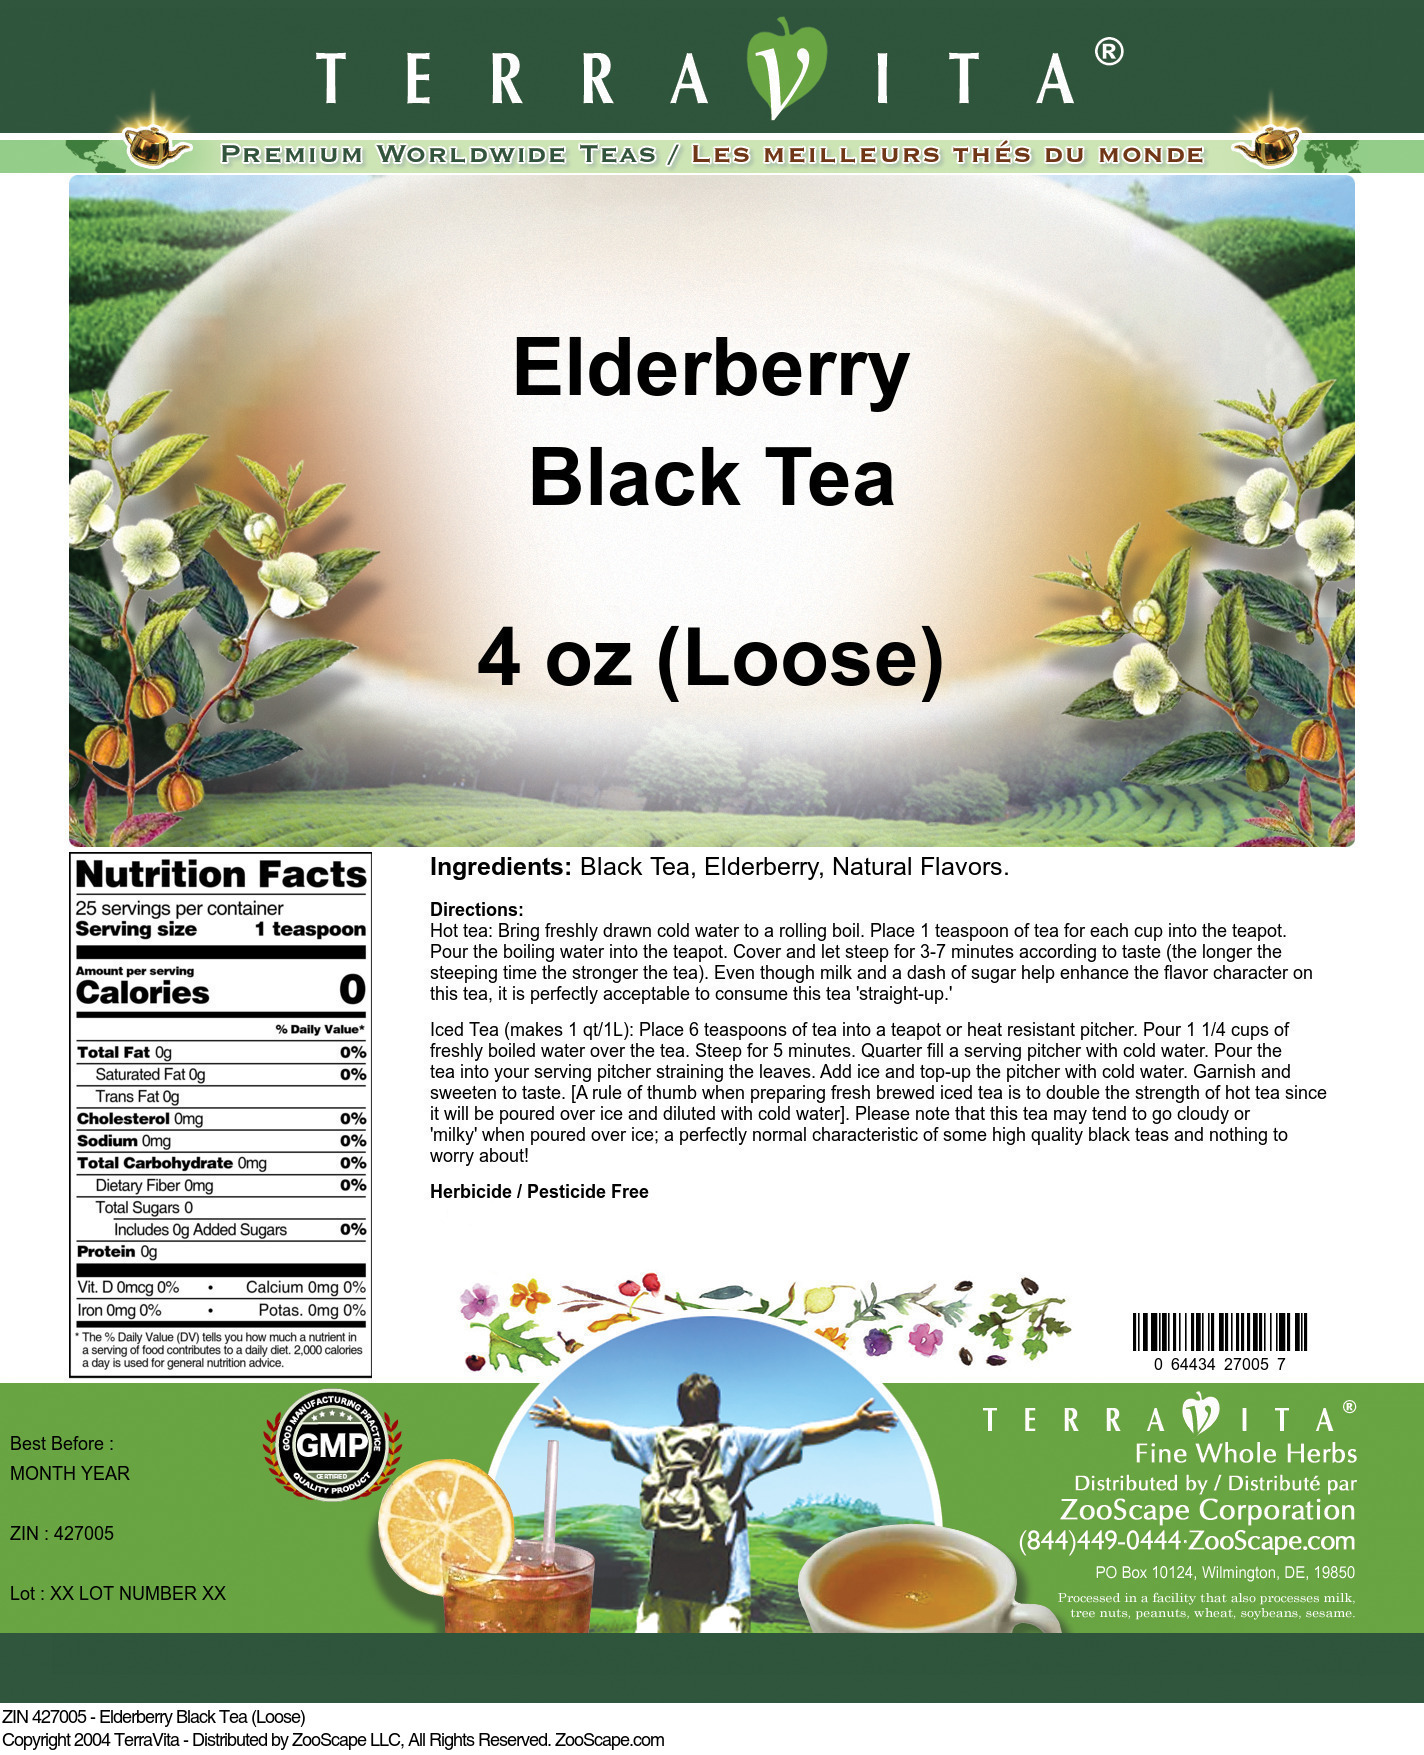 Elderberry Black Tea (Loose) - Label